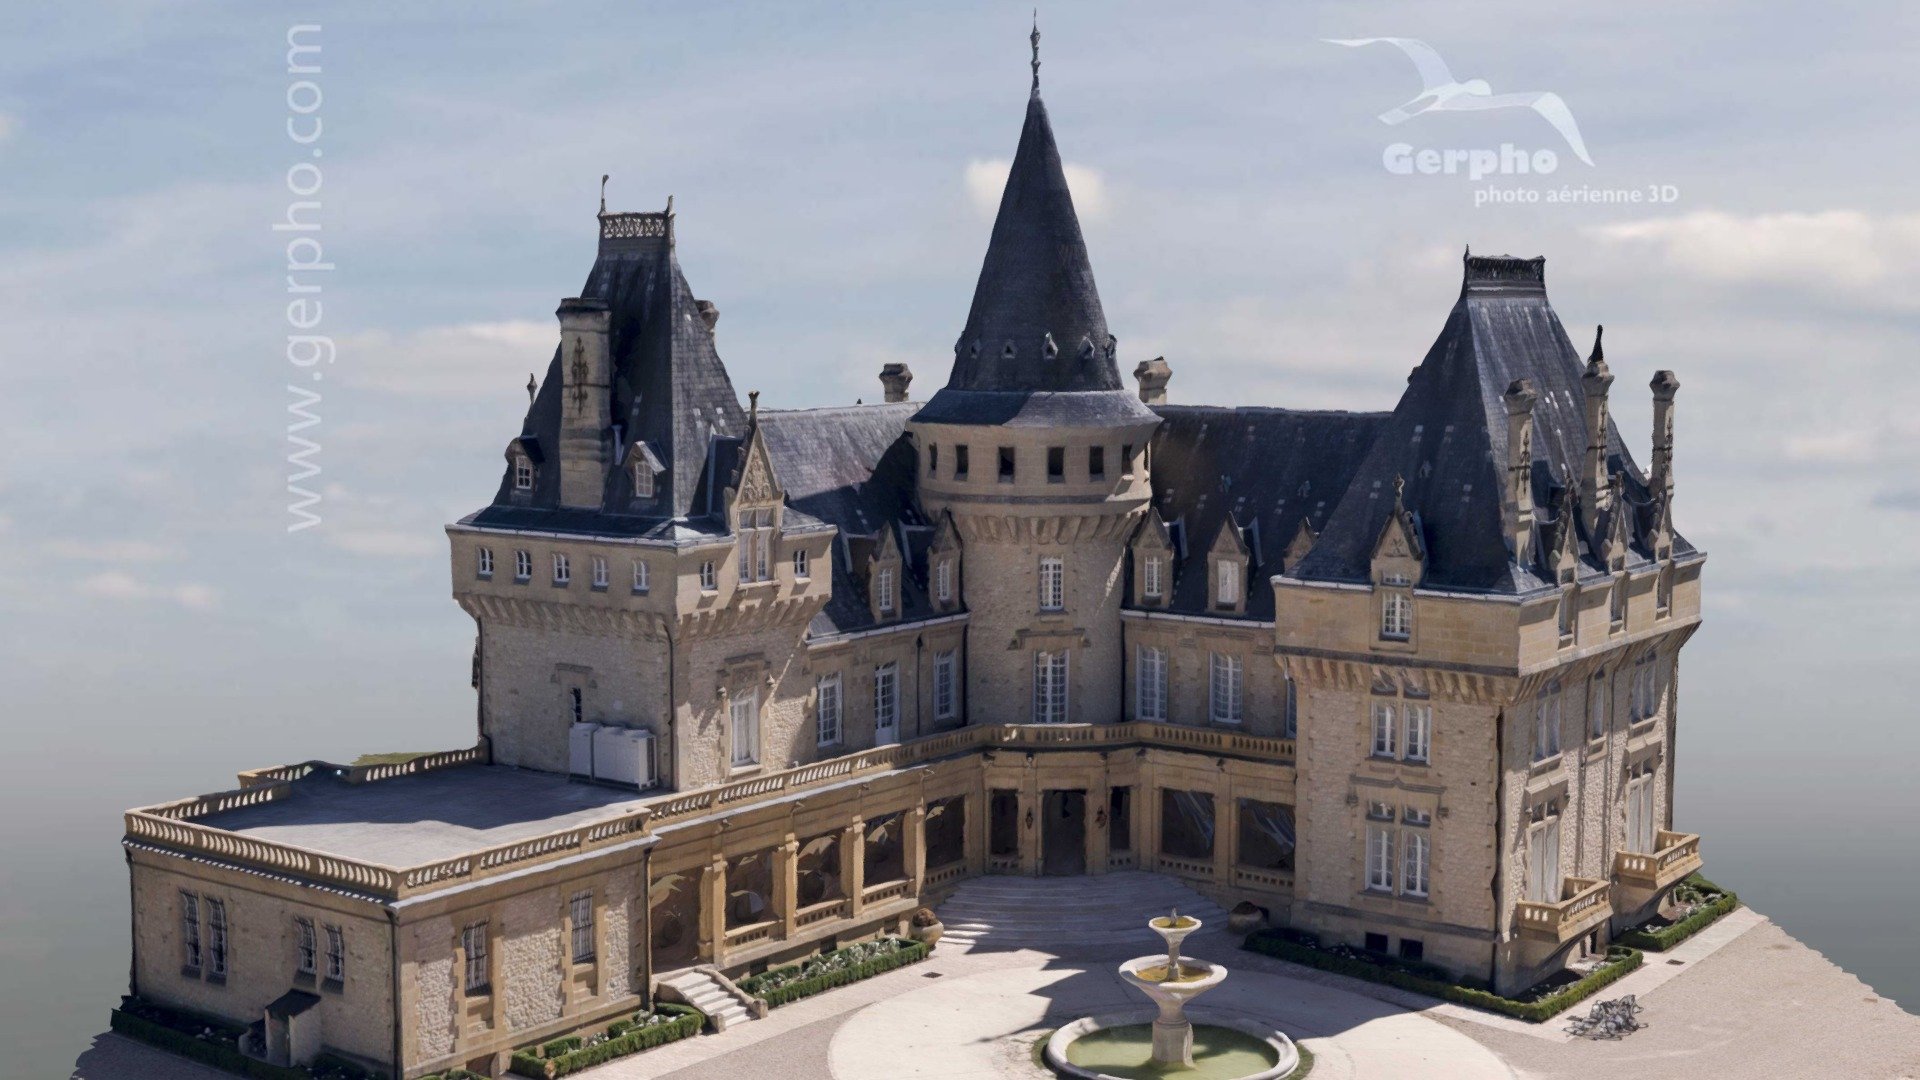 Chateau De Fleurac Buy Royalty Free 3d Model By Gerpho 3d Gerpho [dd8c663] Sketchfab Store